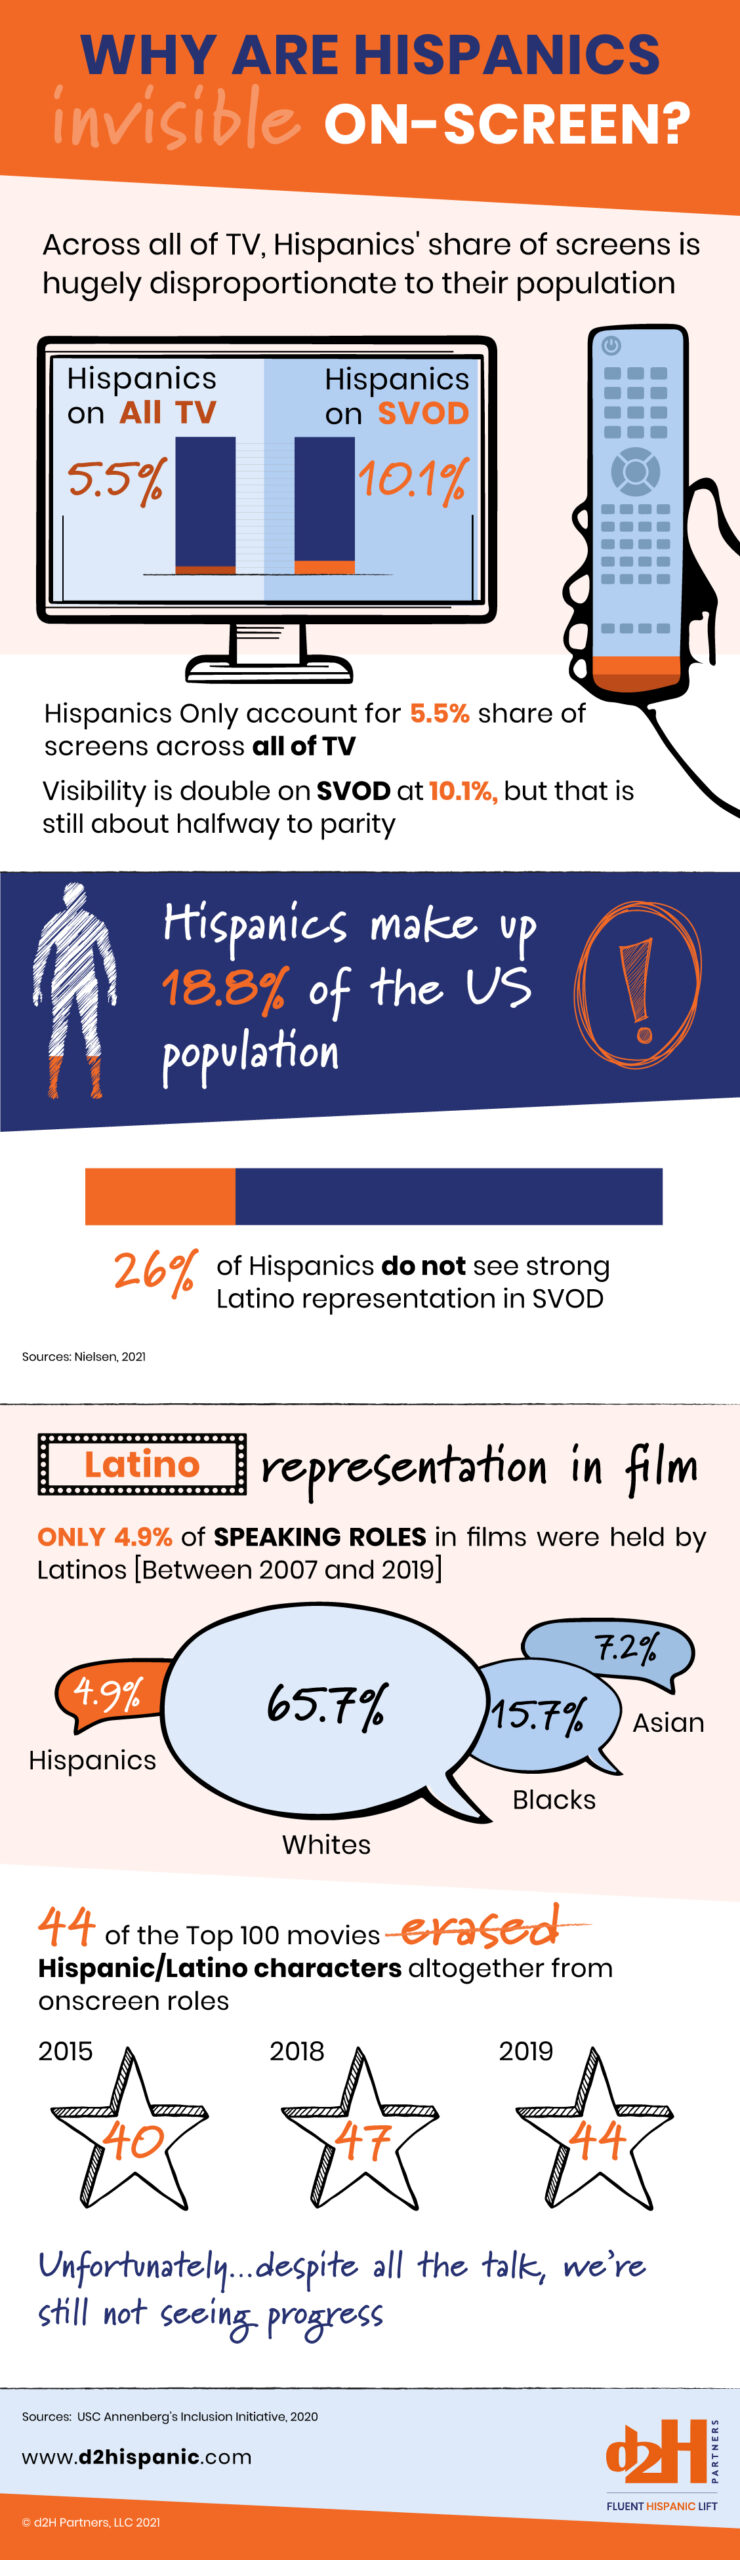 Hispanics Invisible On-Screen